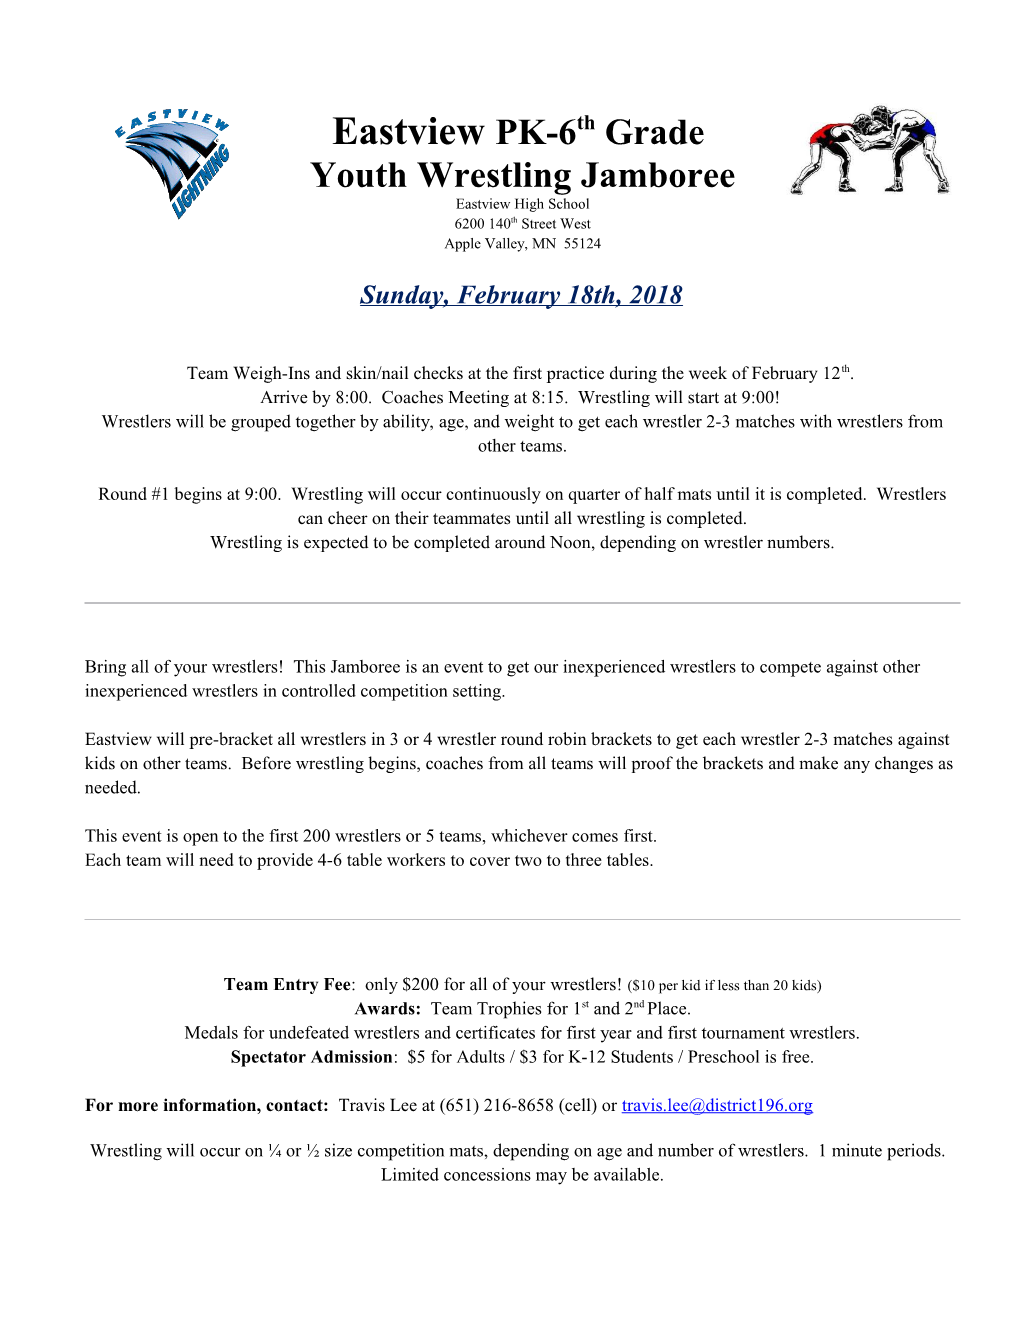 Youth Wrestling Jamboree